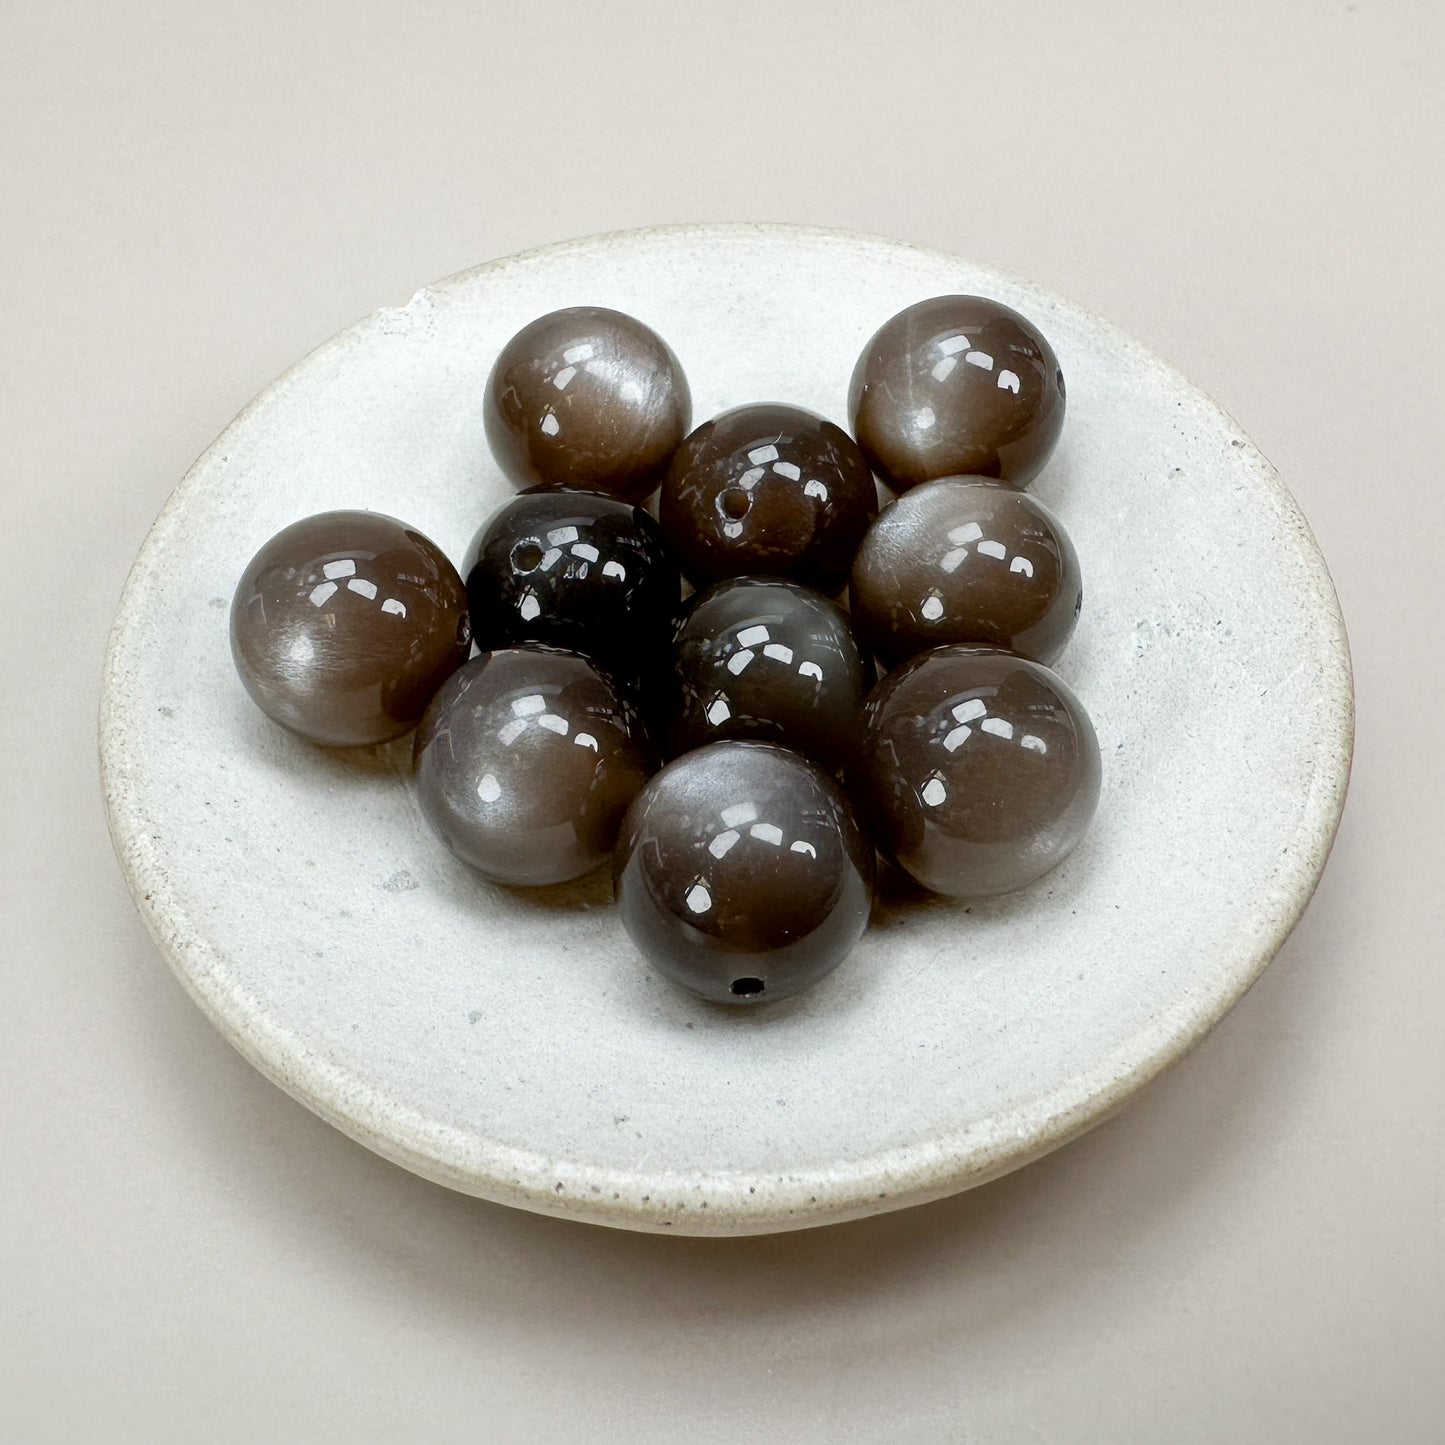 Chocolate Moonstone 12mm Smooth Round Bead - 1 pc. (P3110)